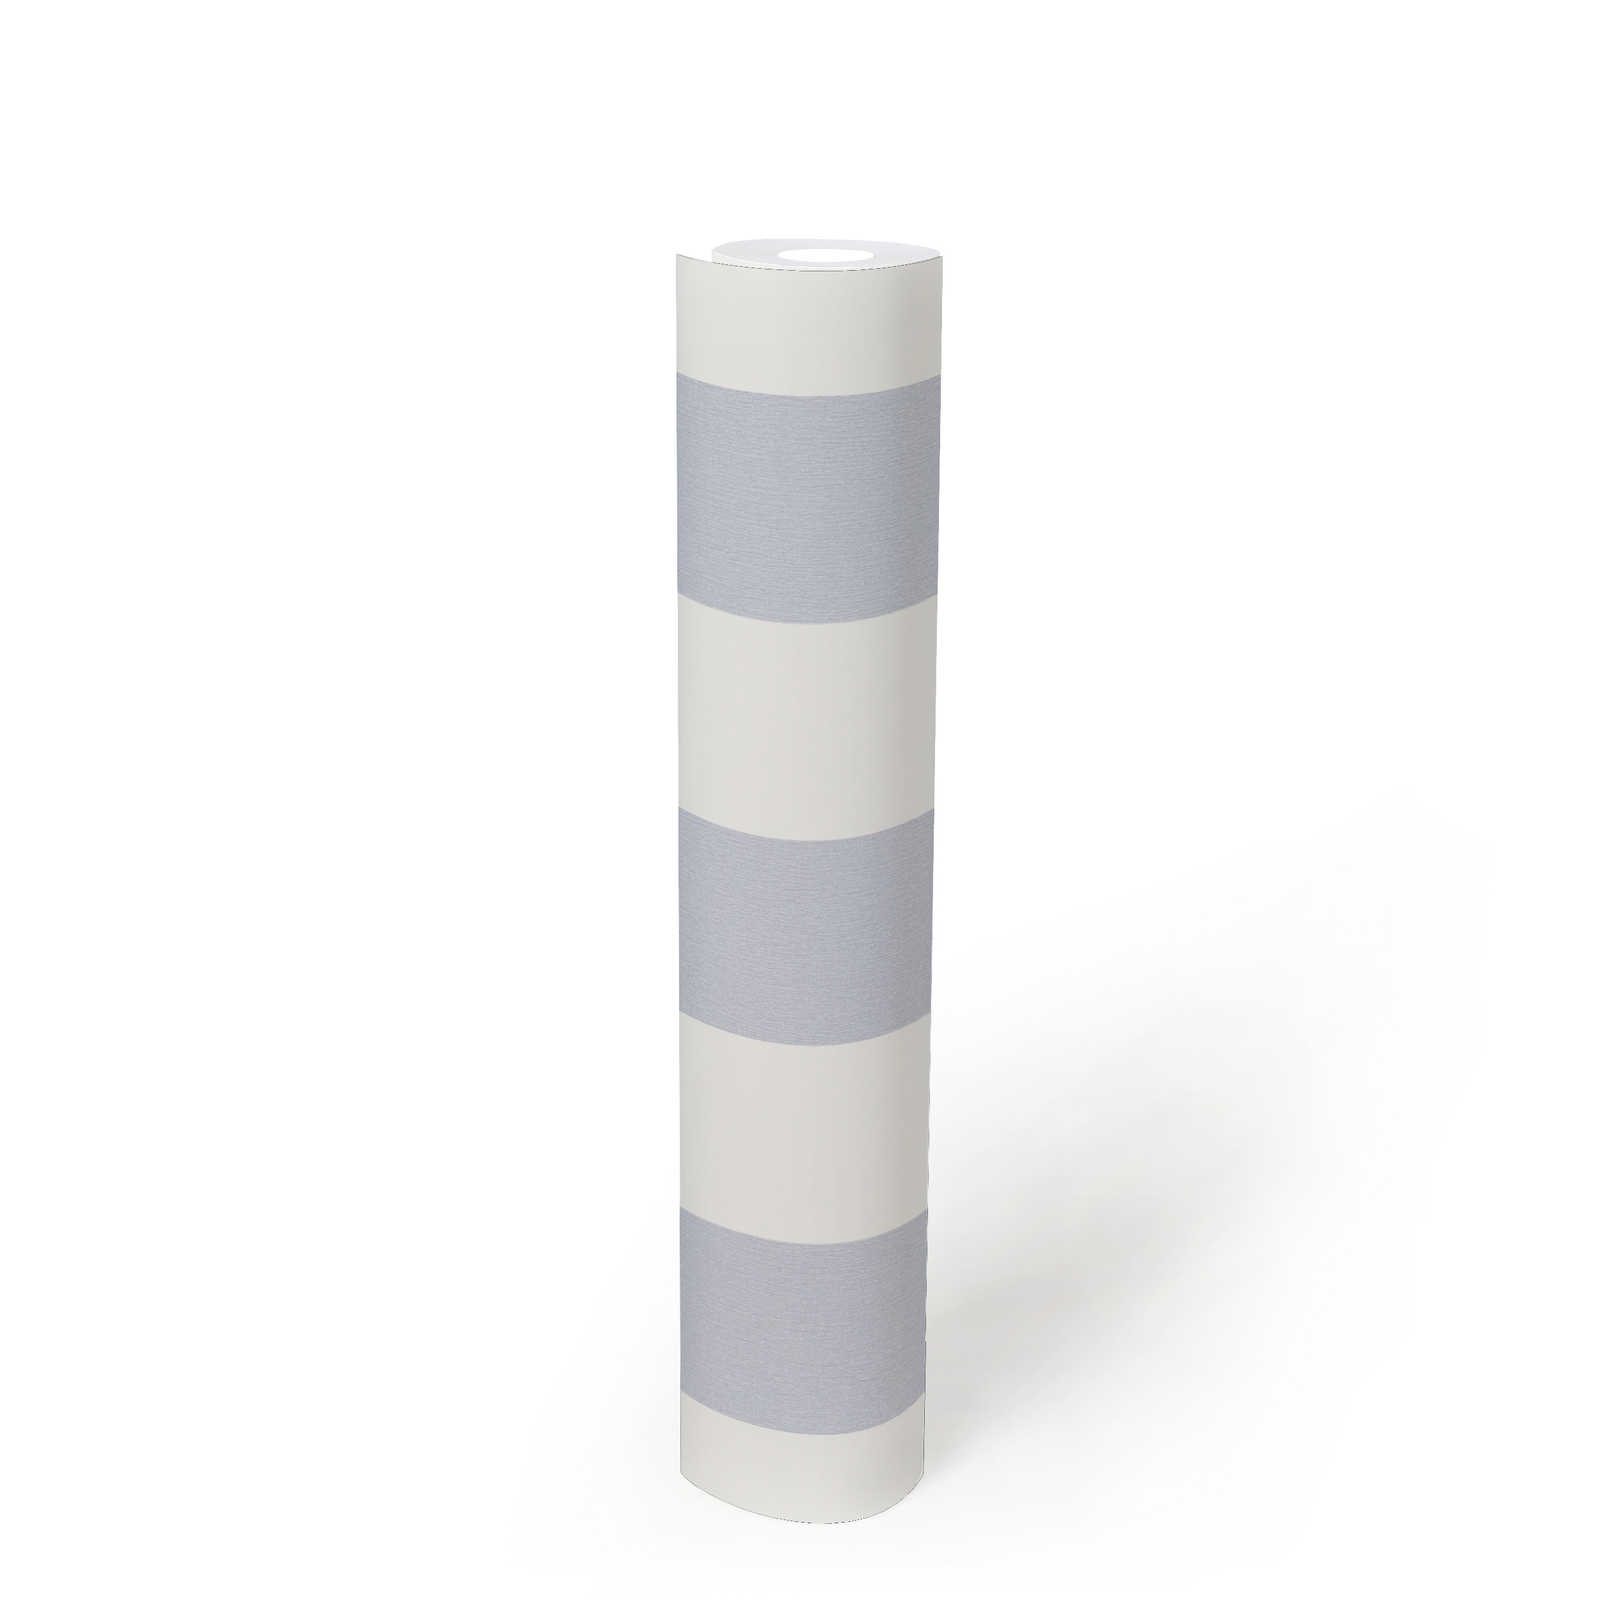             behang kinderkamer verticale strepen - grijs, wit
        